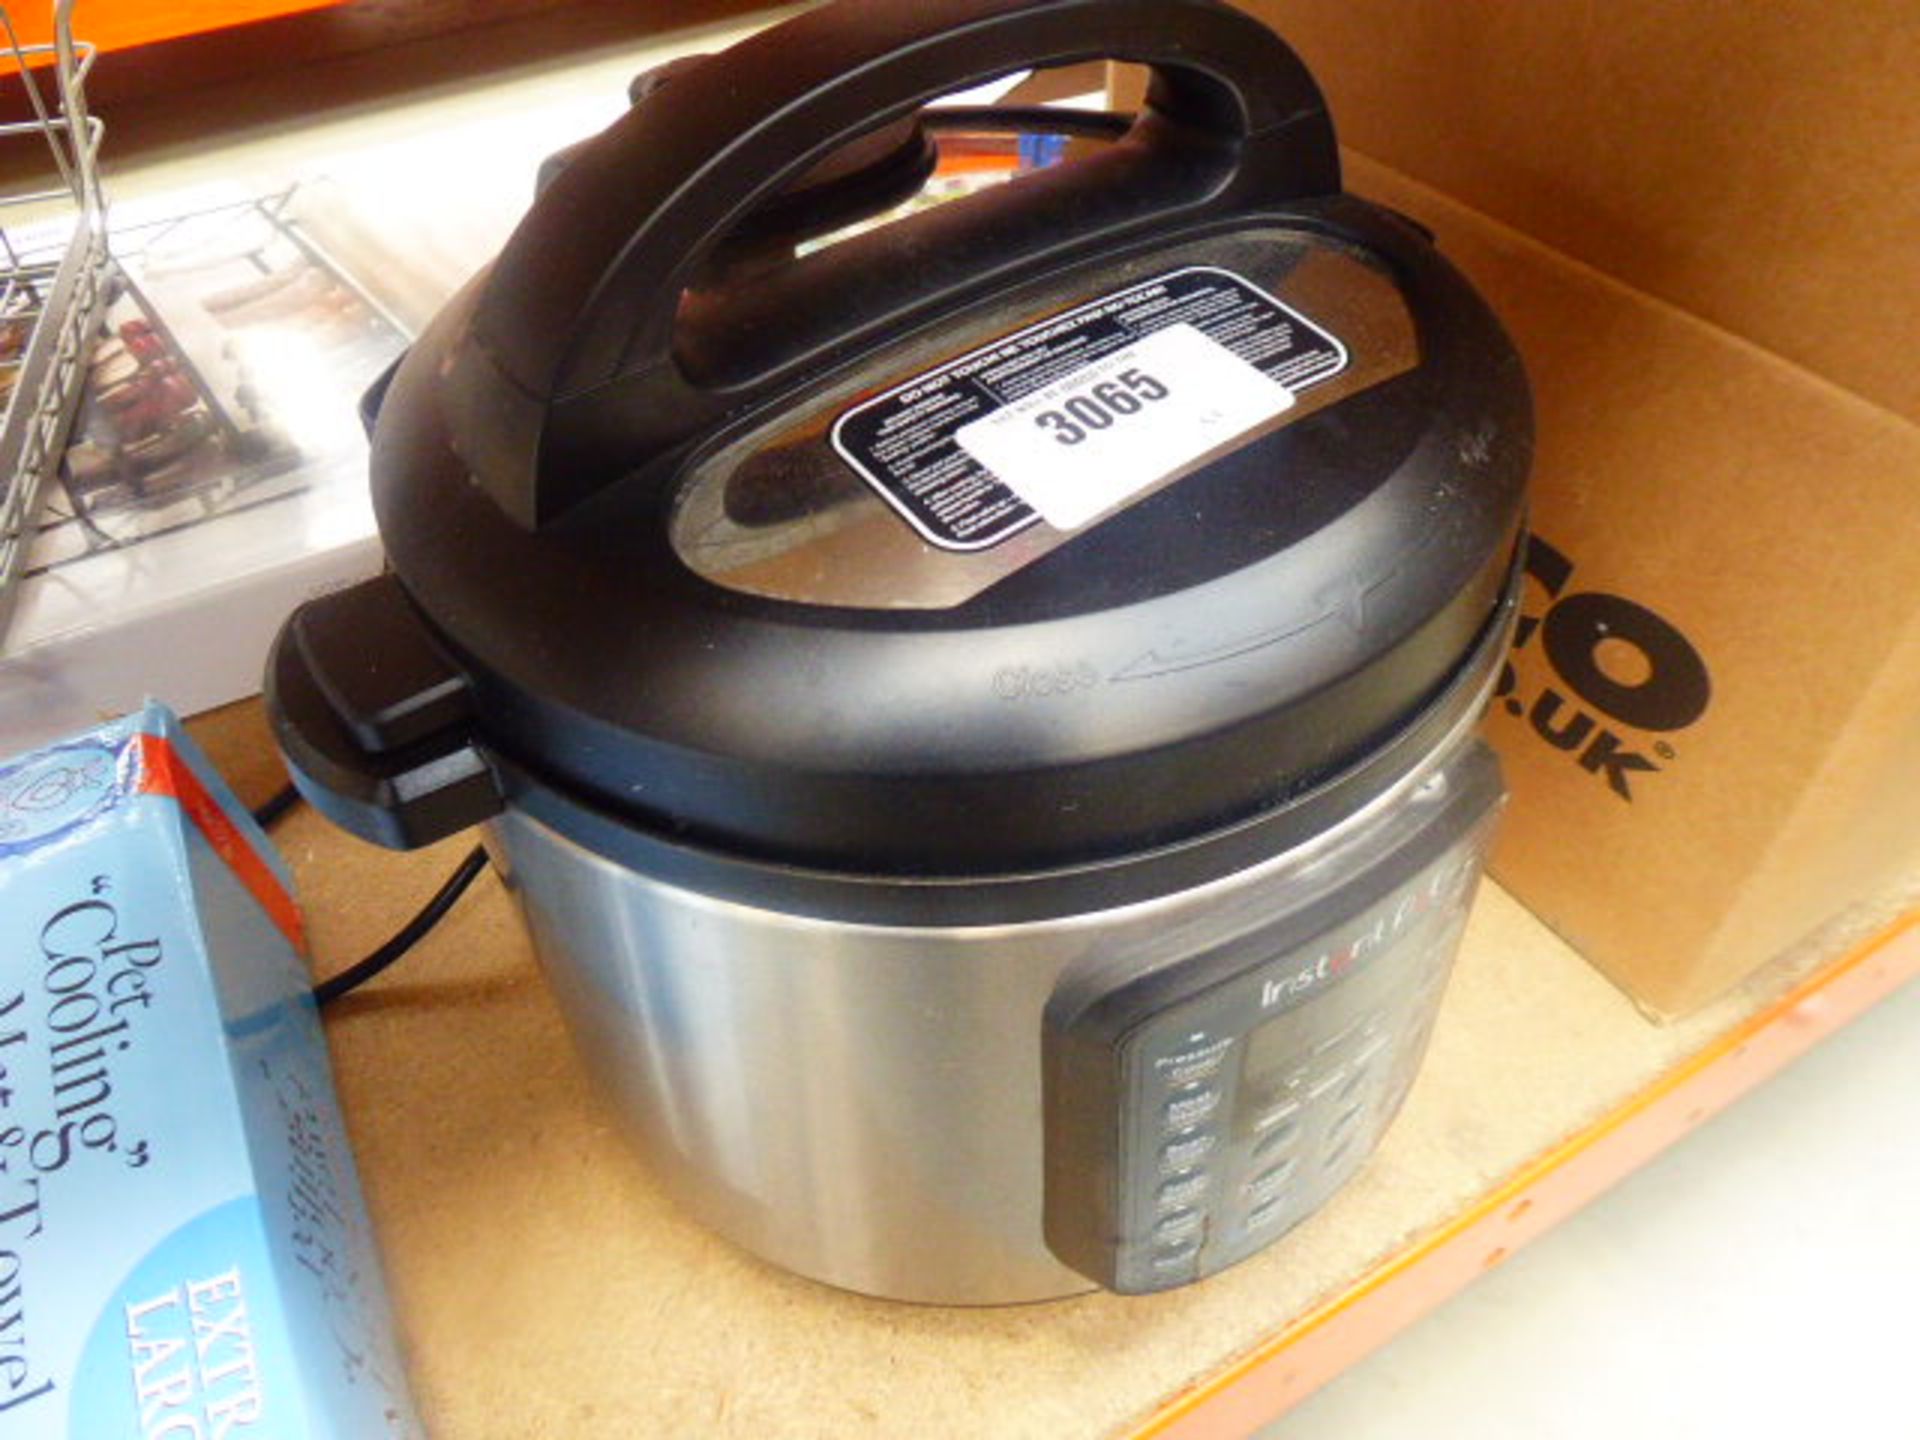 Unboxed Instant Pot pressure cooker